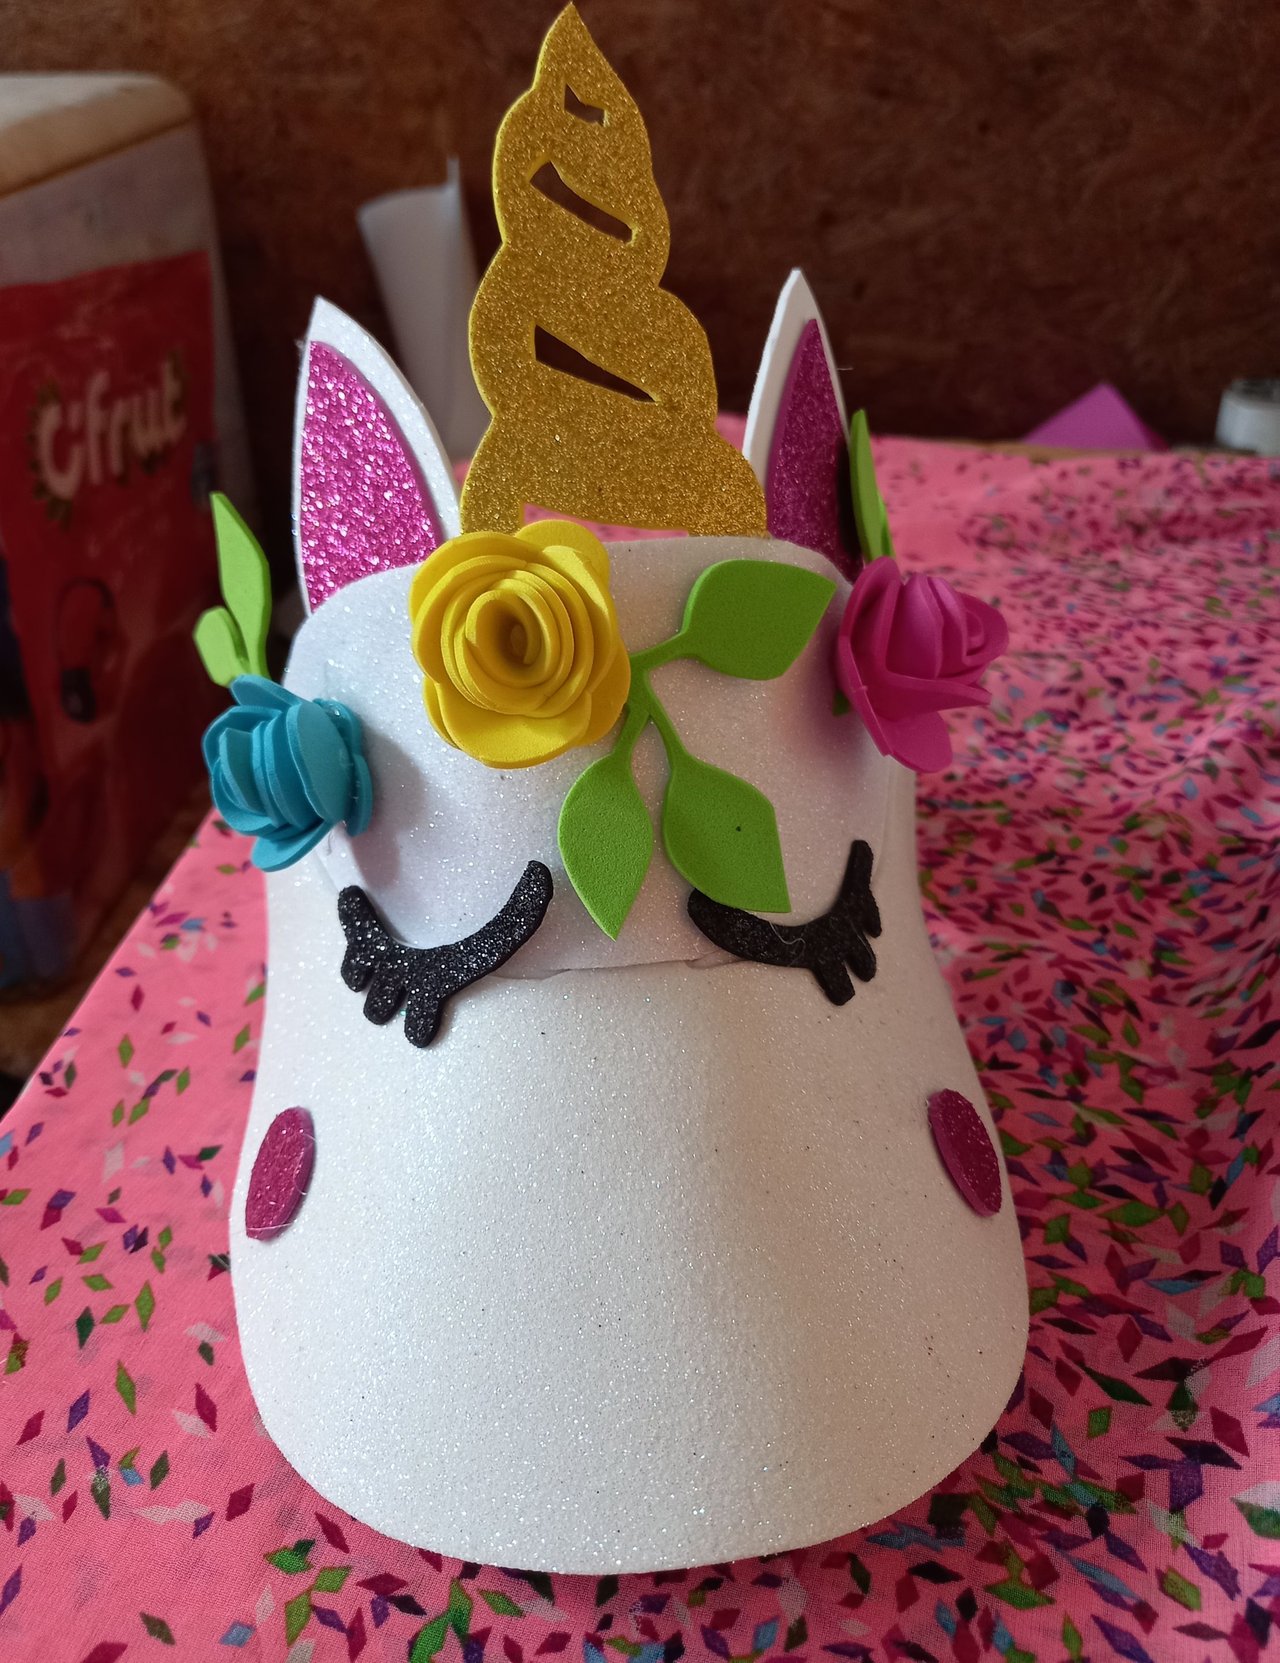 Esp/Eng) Tutorial/¿Cómo hacer hermosa visera de unicornio en to make a beautiful unicorn visor foami? | PeakD